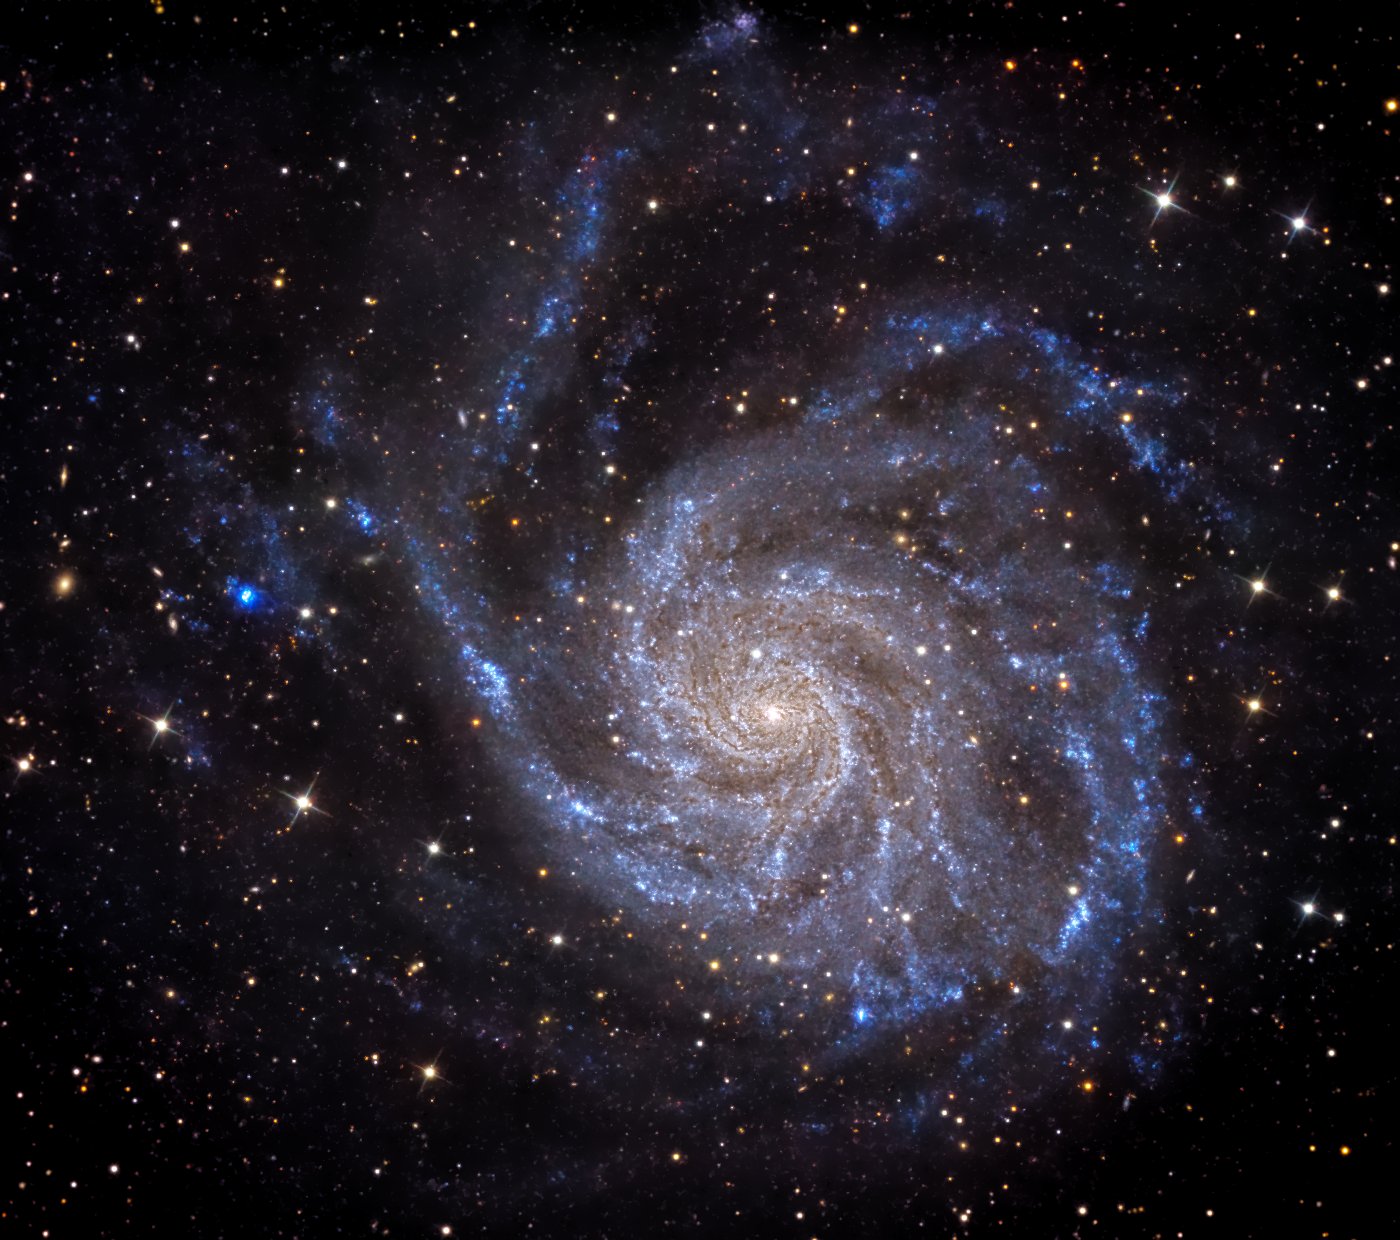 M101 (Pinwheel Galaxy) in continuum light